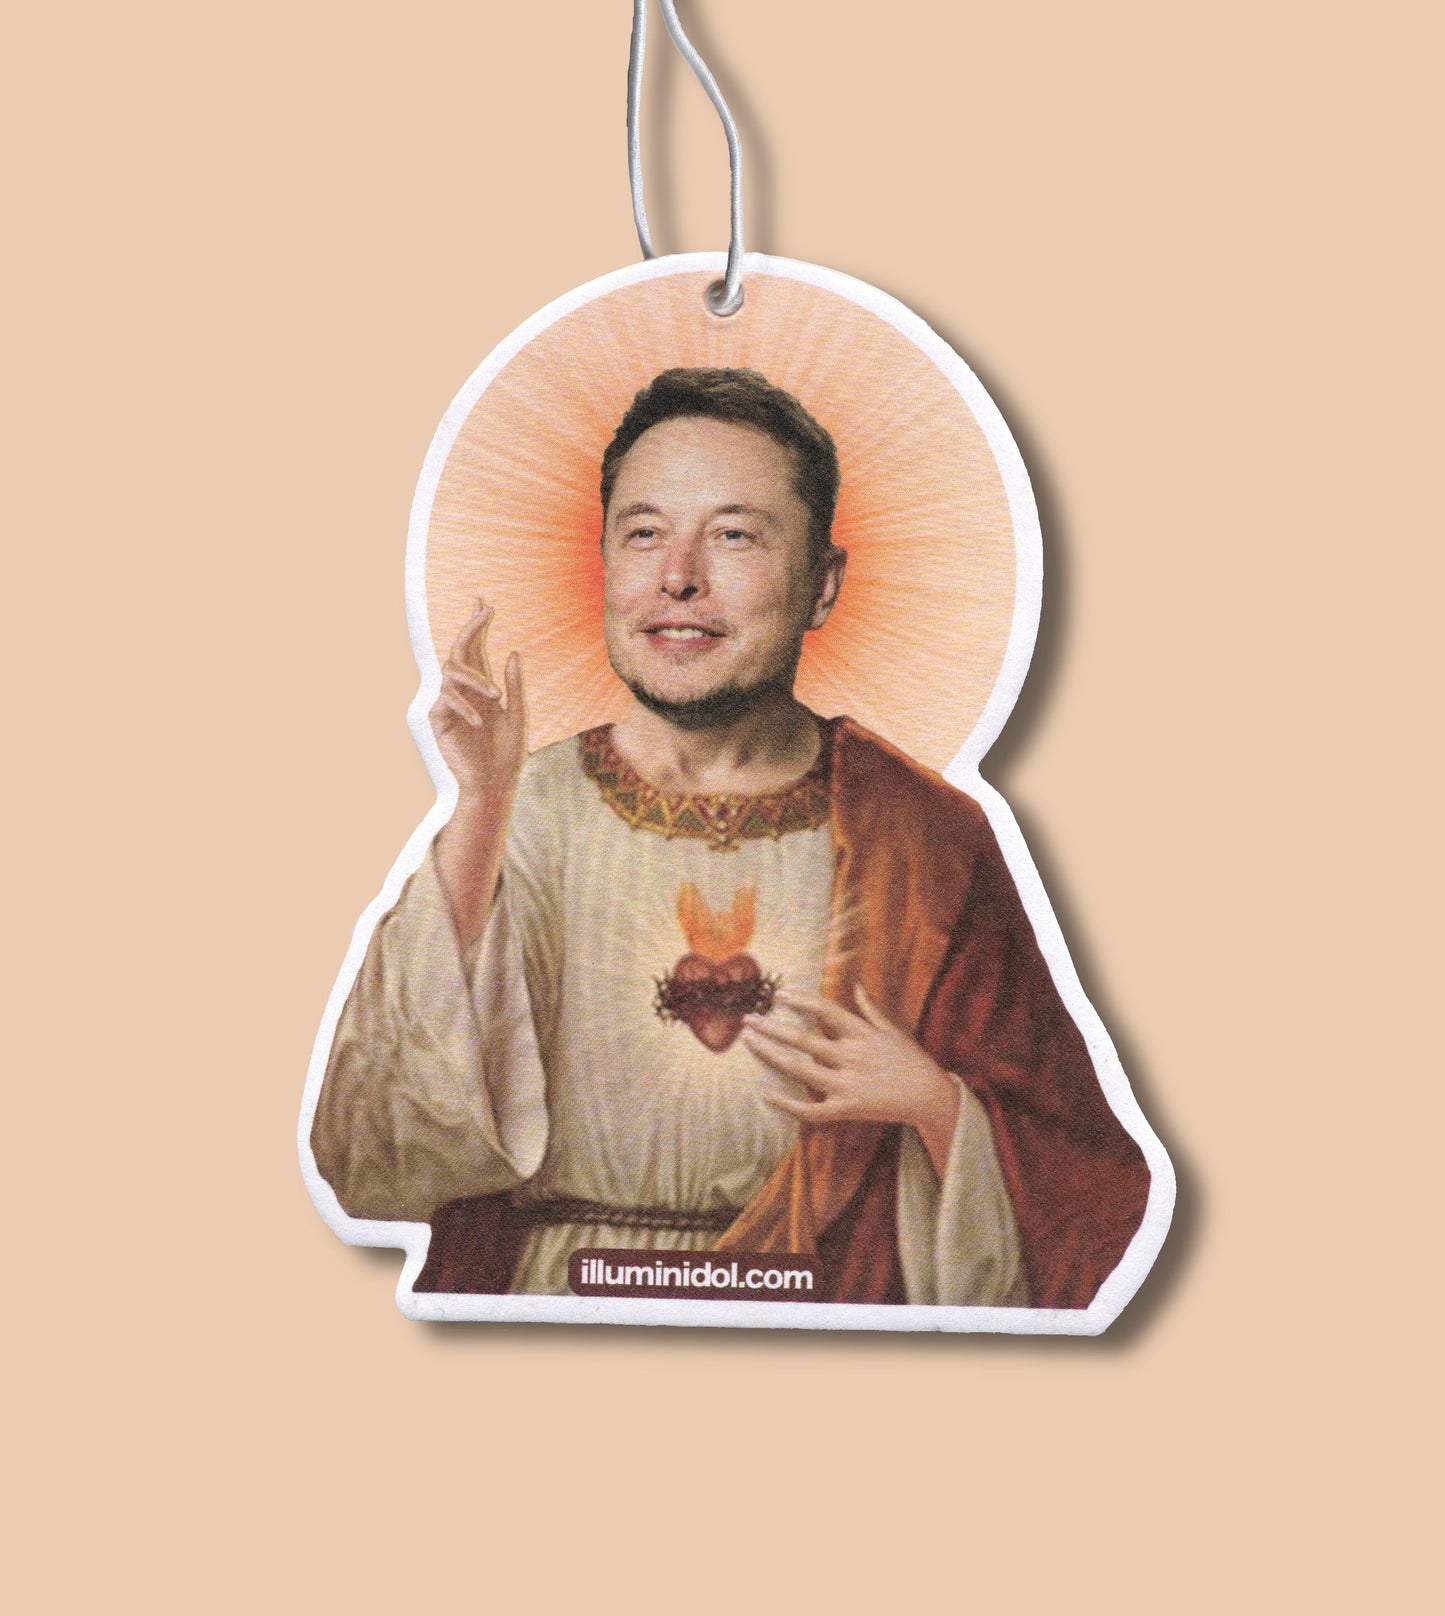 Elon Musk Air Freshener